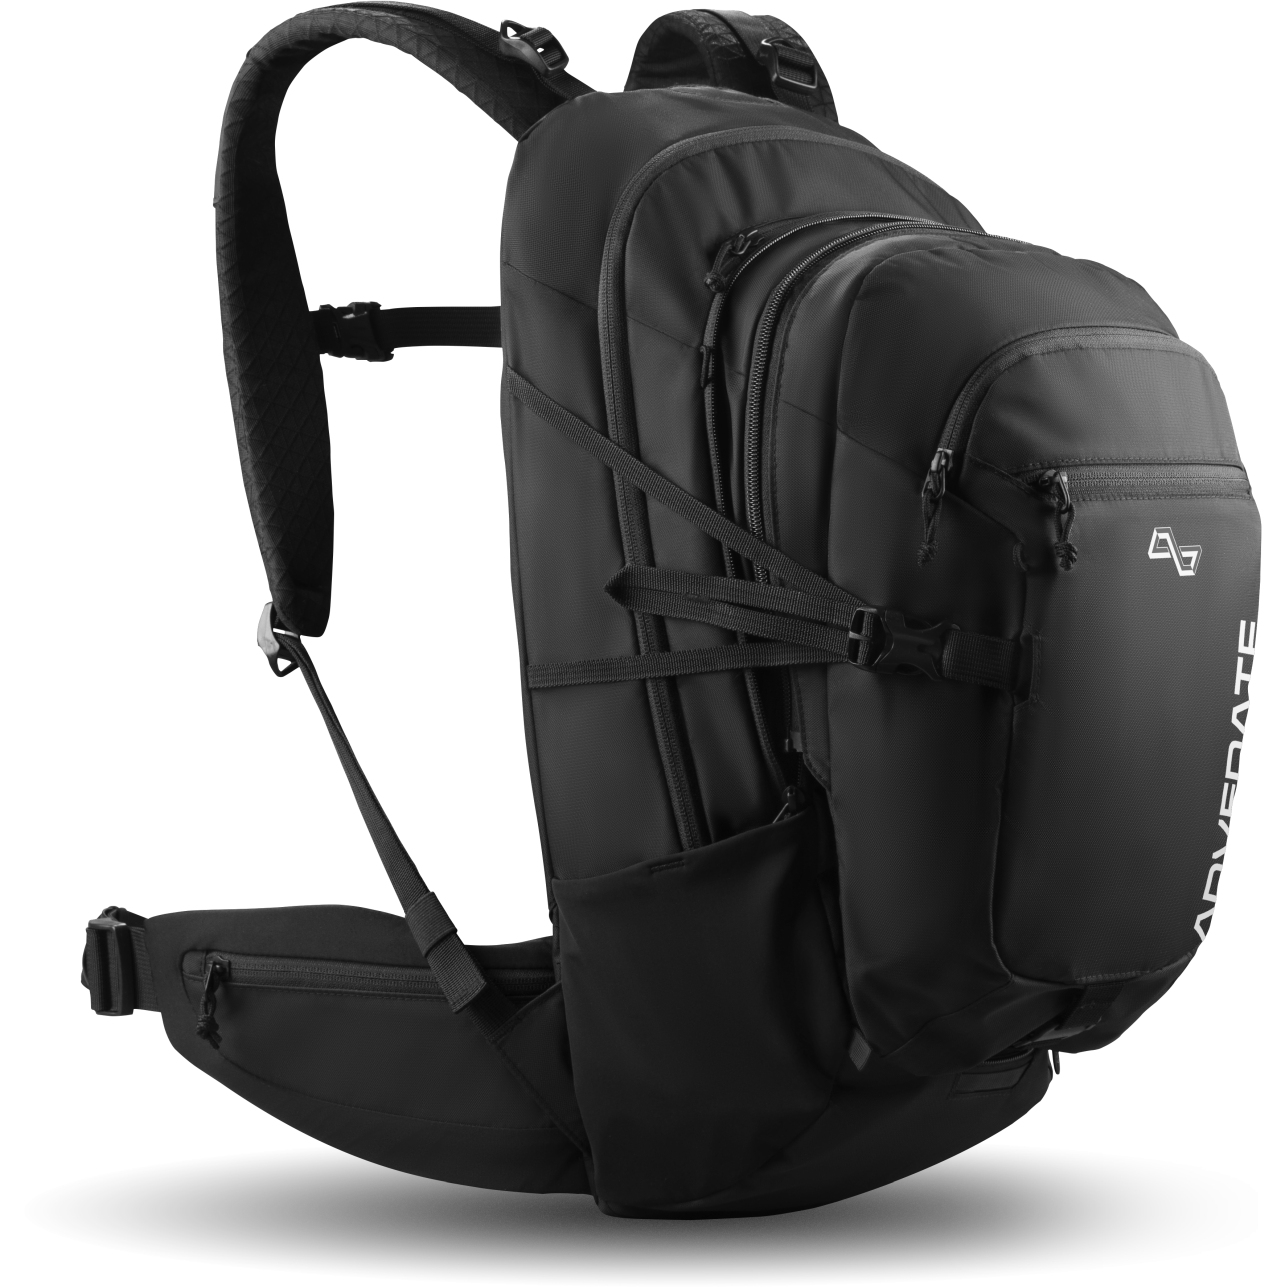 Productfoto van Advenate Symphony 18+2+6 Backpack - Pure Black